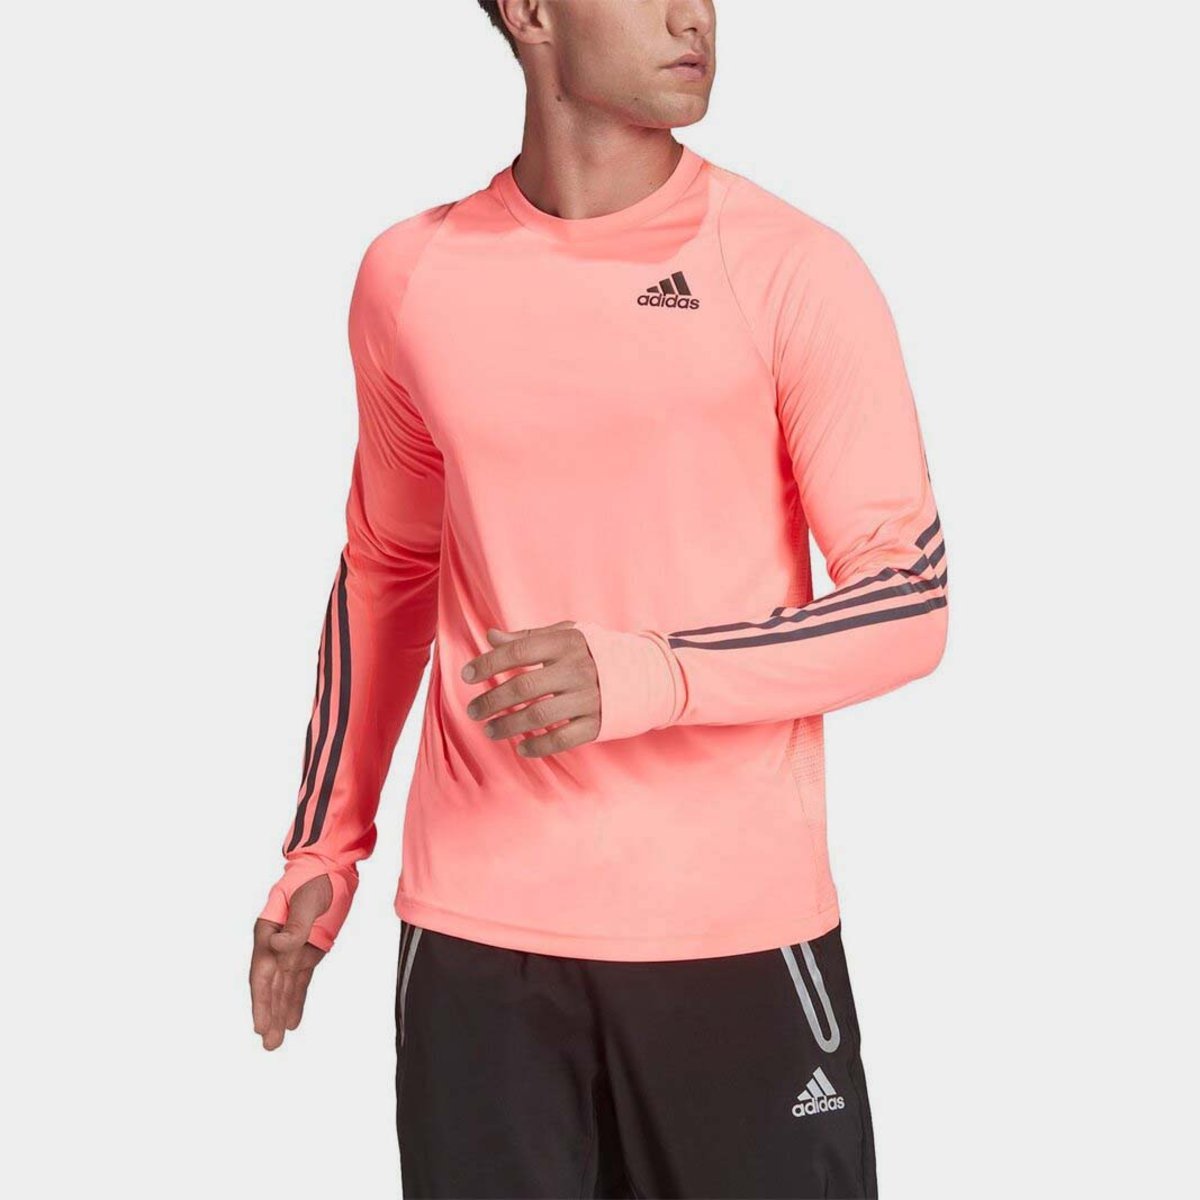 Adidas Workout clothes, Shop @ FitnessApparelExp